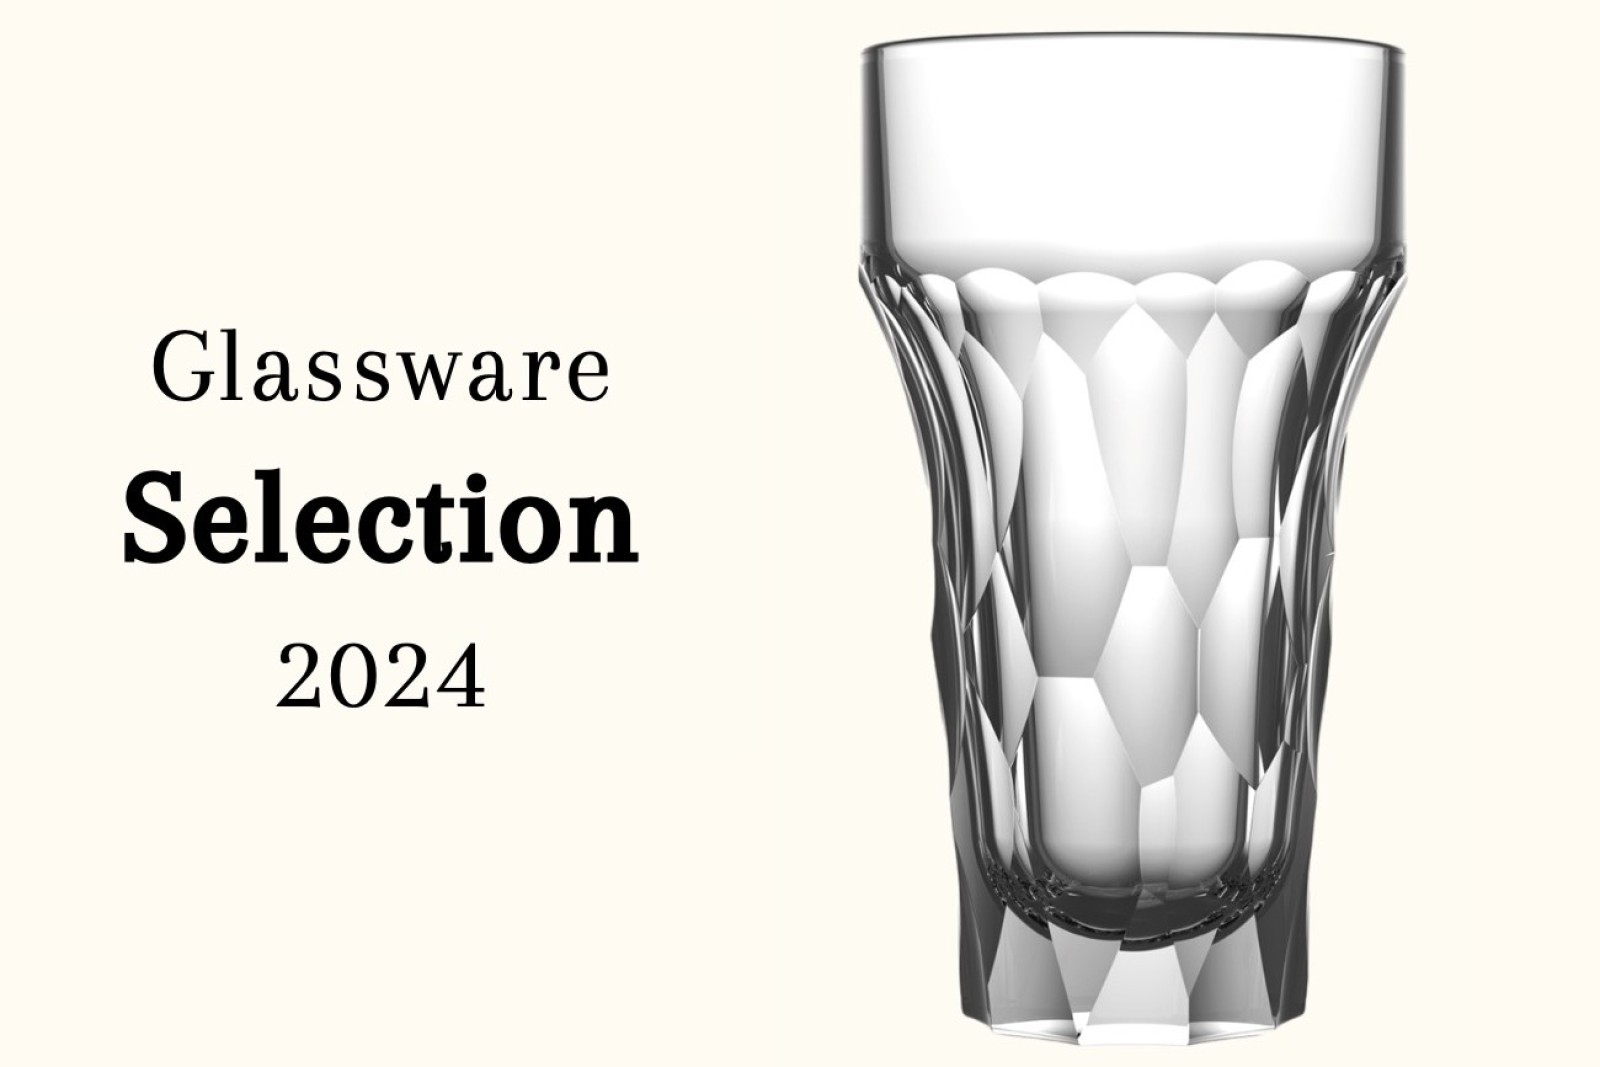 Glassware Selection 2024